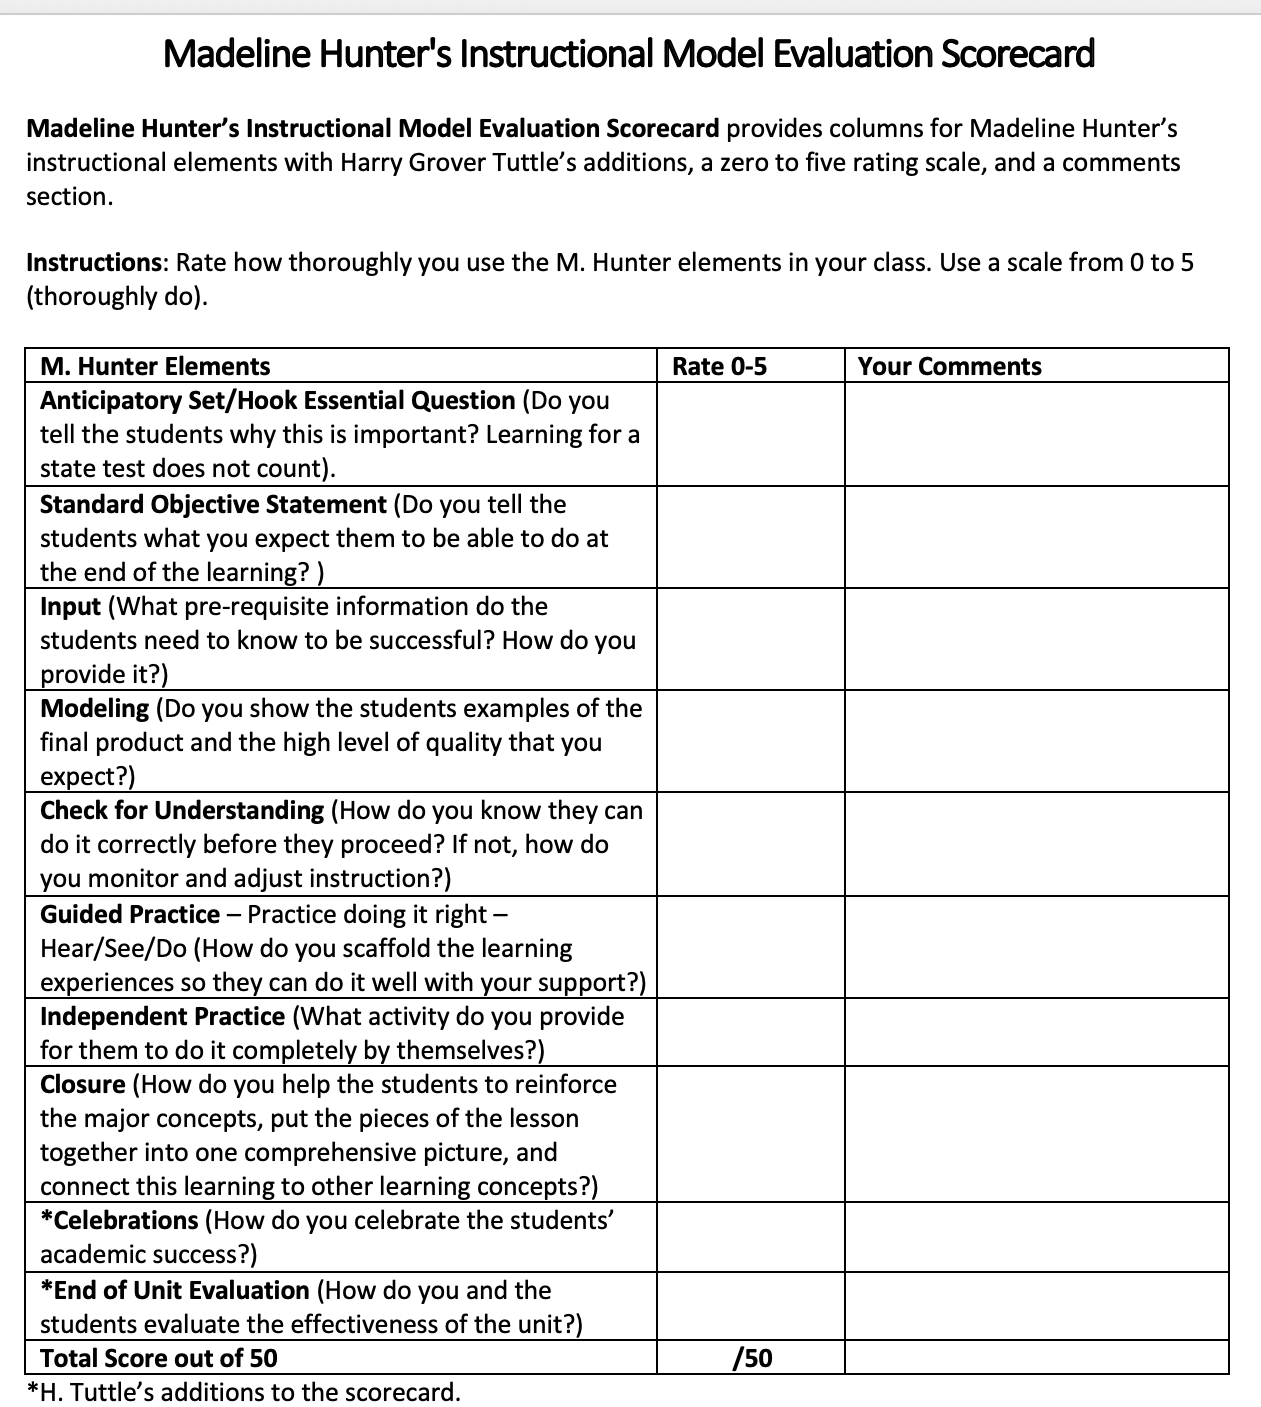 Madeline Hunter's Instructional Model Evaluation Scorecard